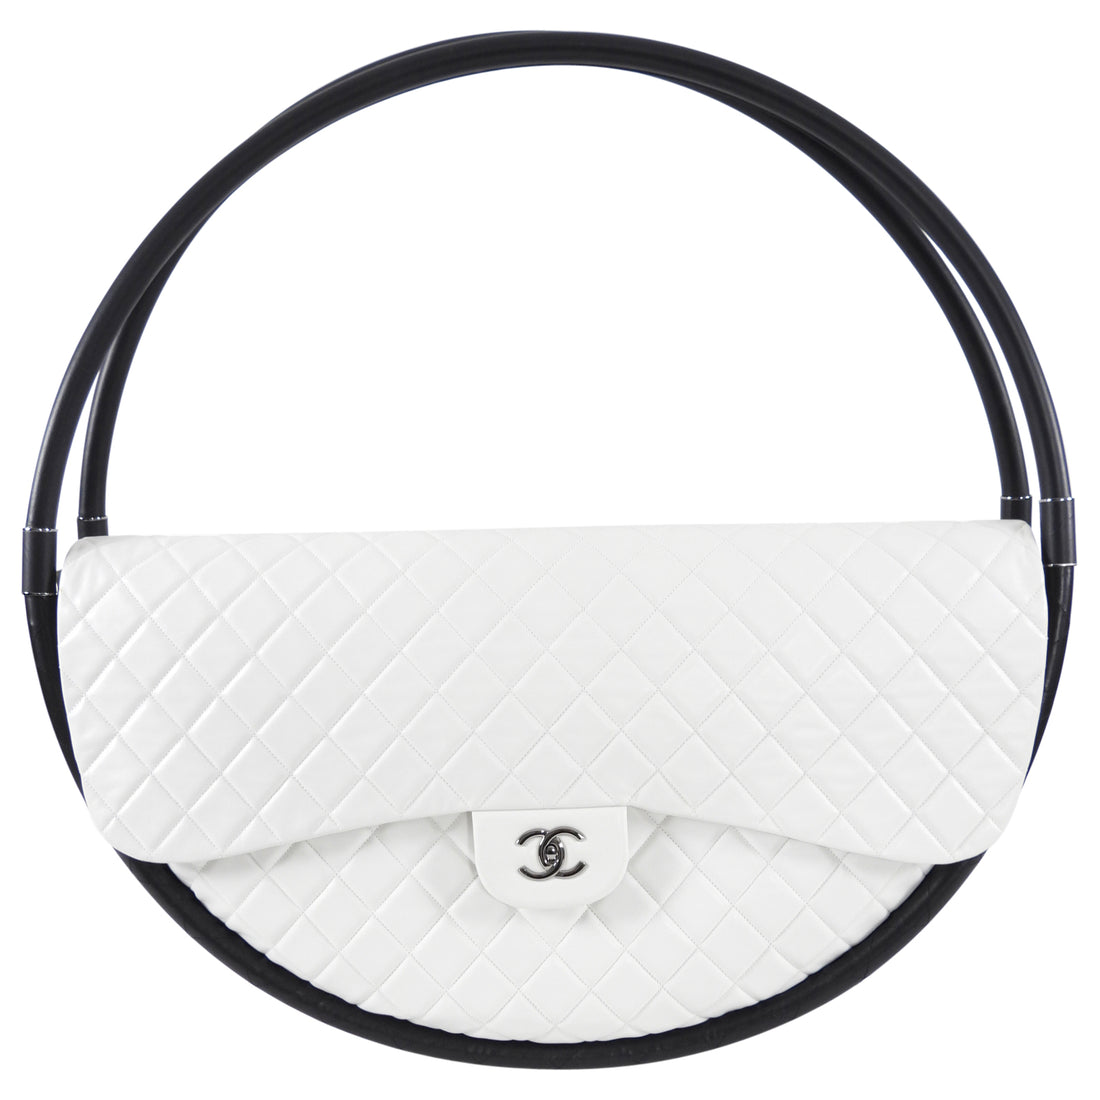 A history of Floyd Mayweather's Chanel hula hoop handbag